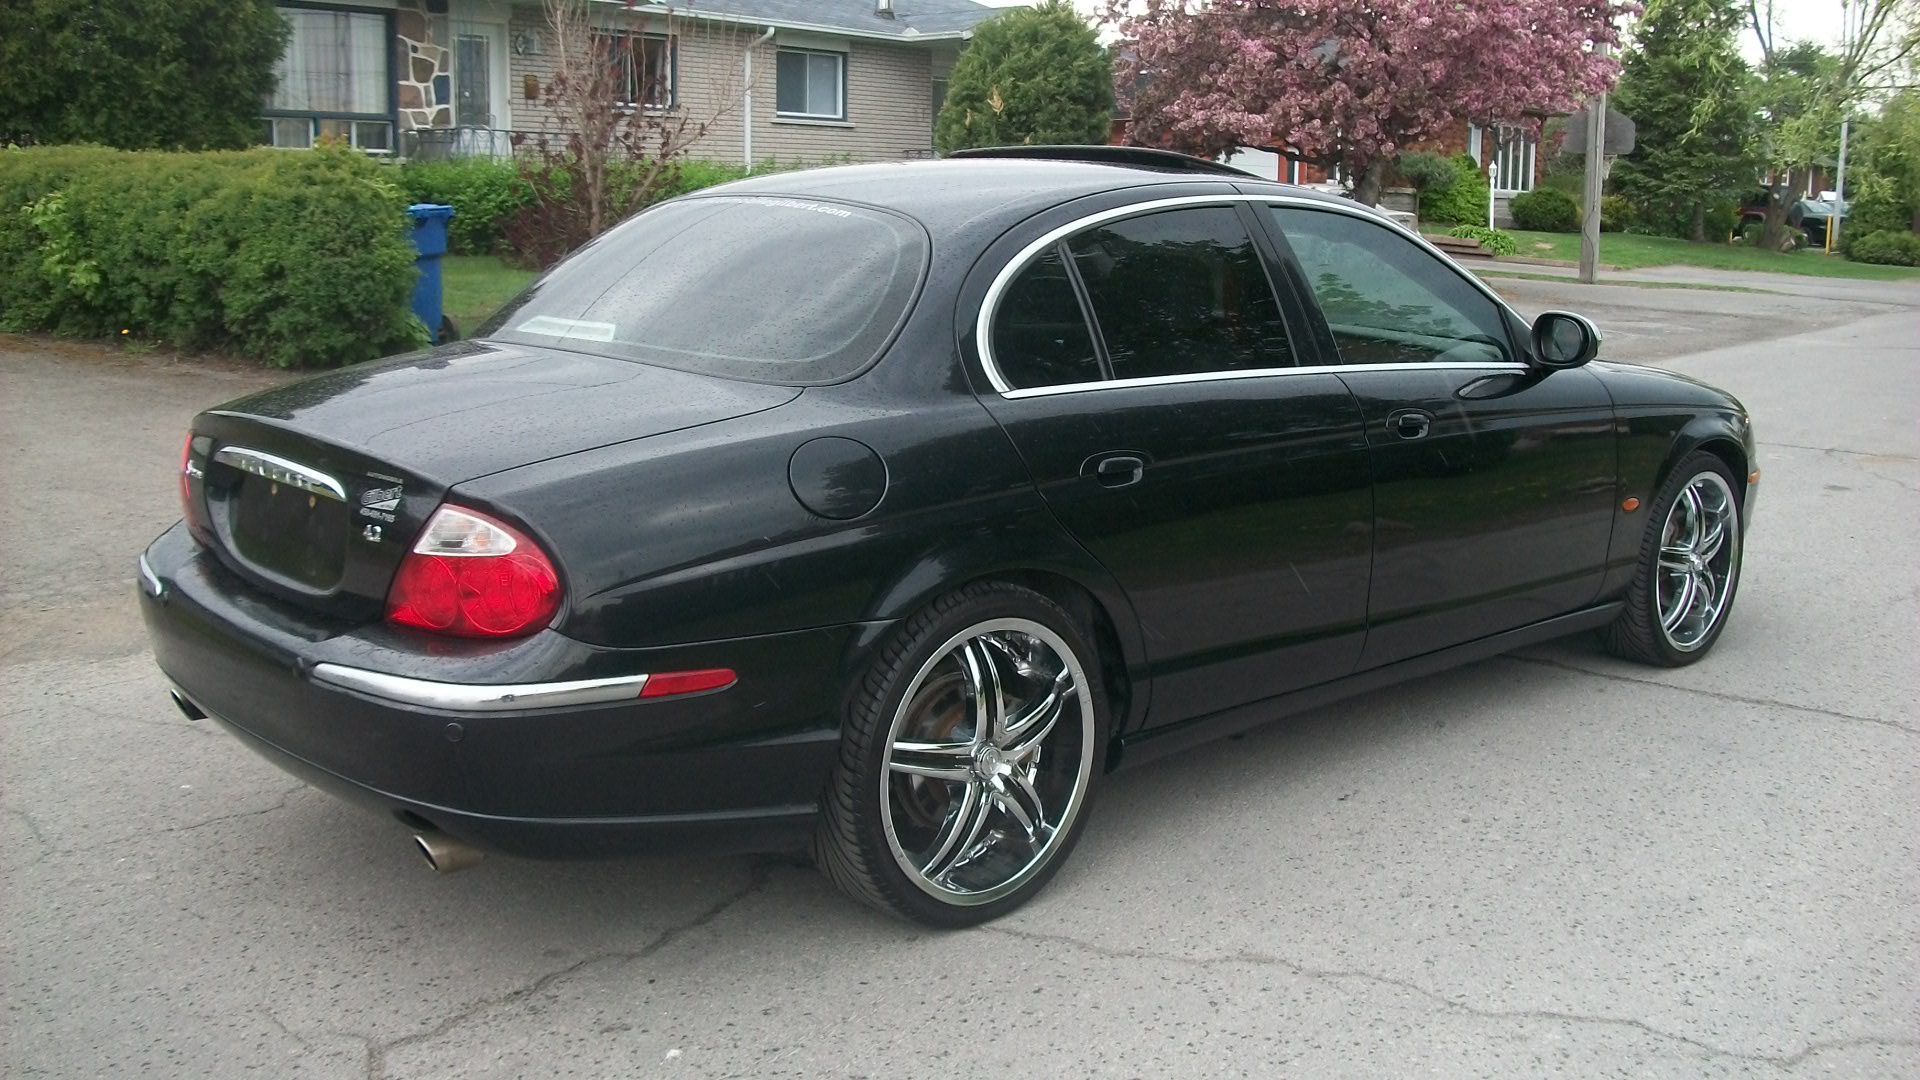 Going to see this 2004 Jaguar S-type 4.2 - Jaguar Forums ...